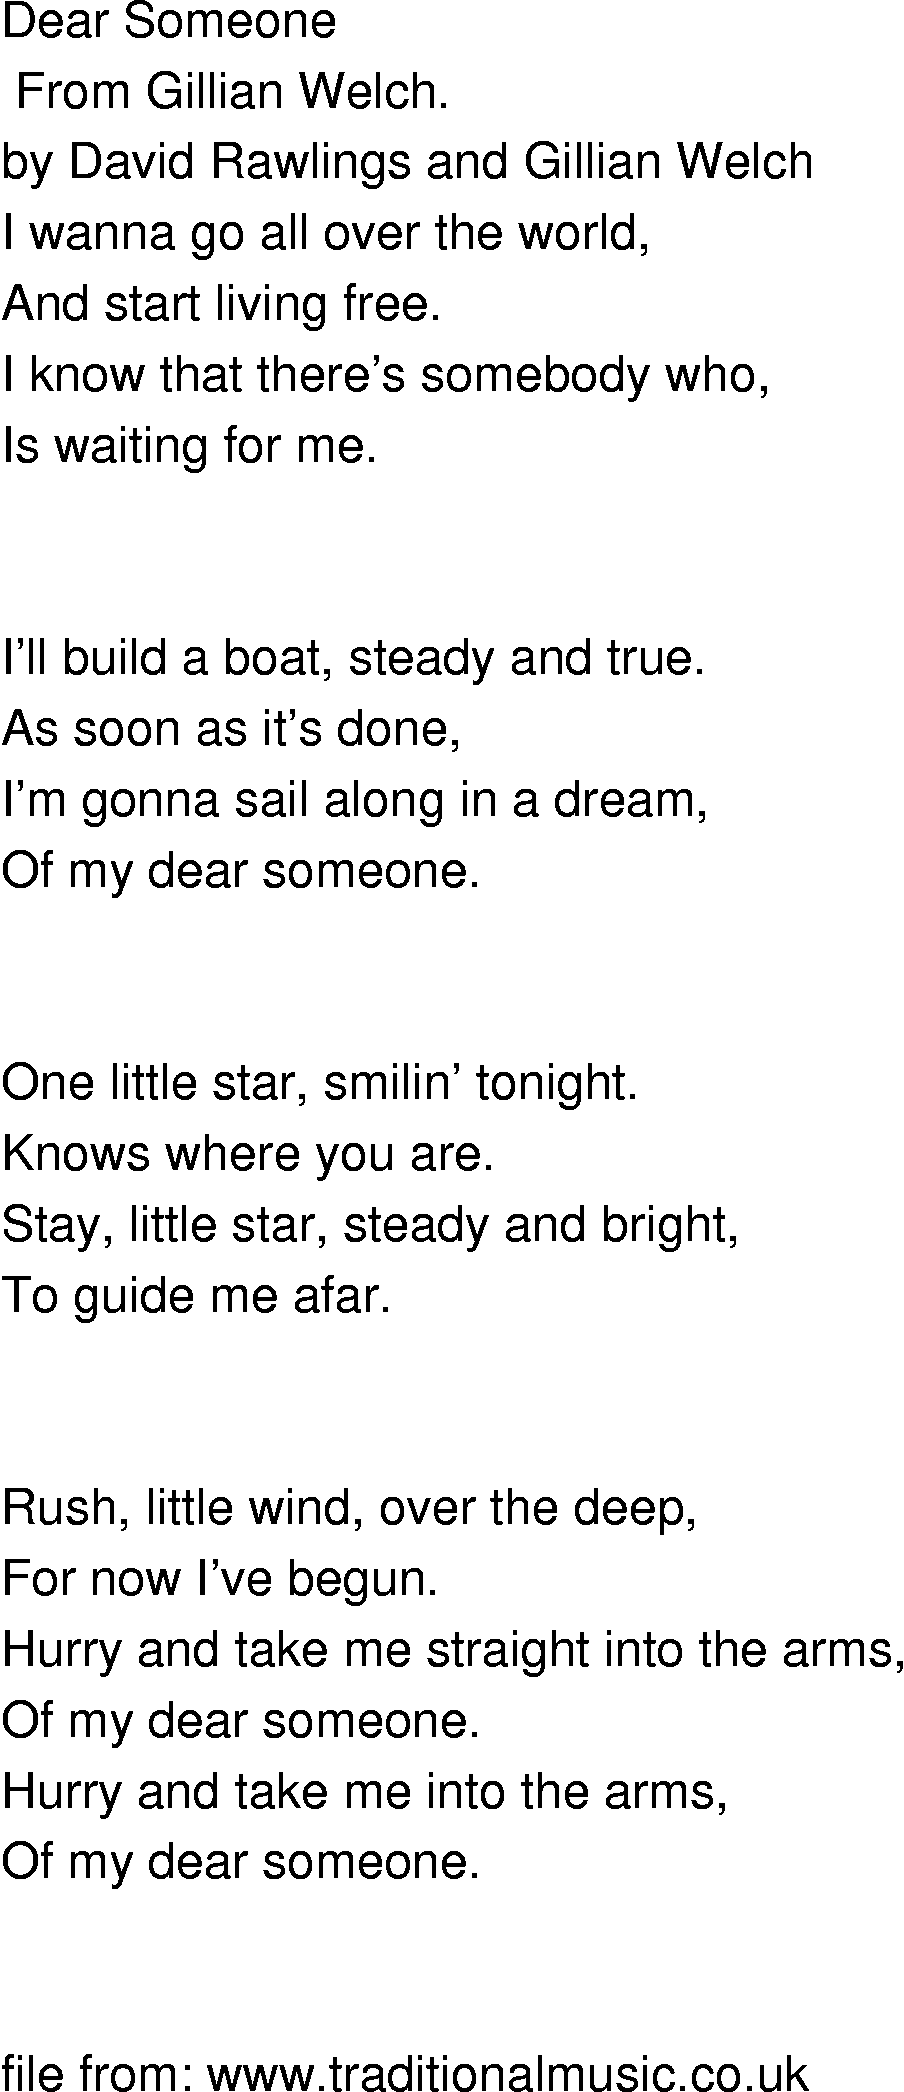 Old-Time (oldtimey) Song Lyrics - dear someone